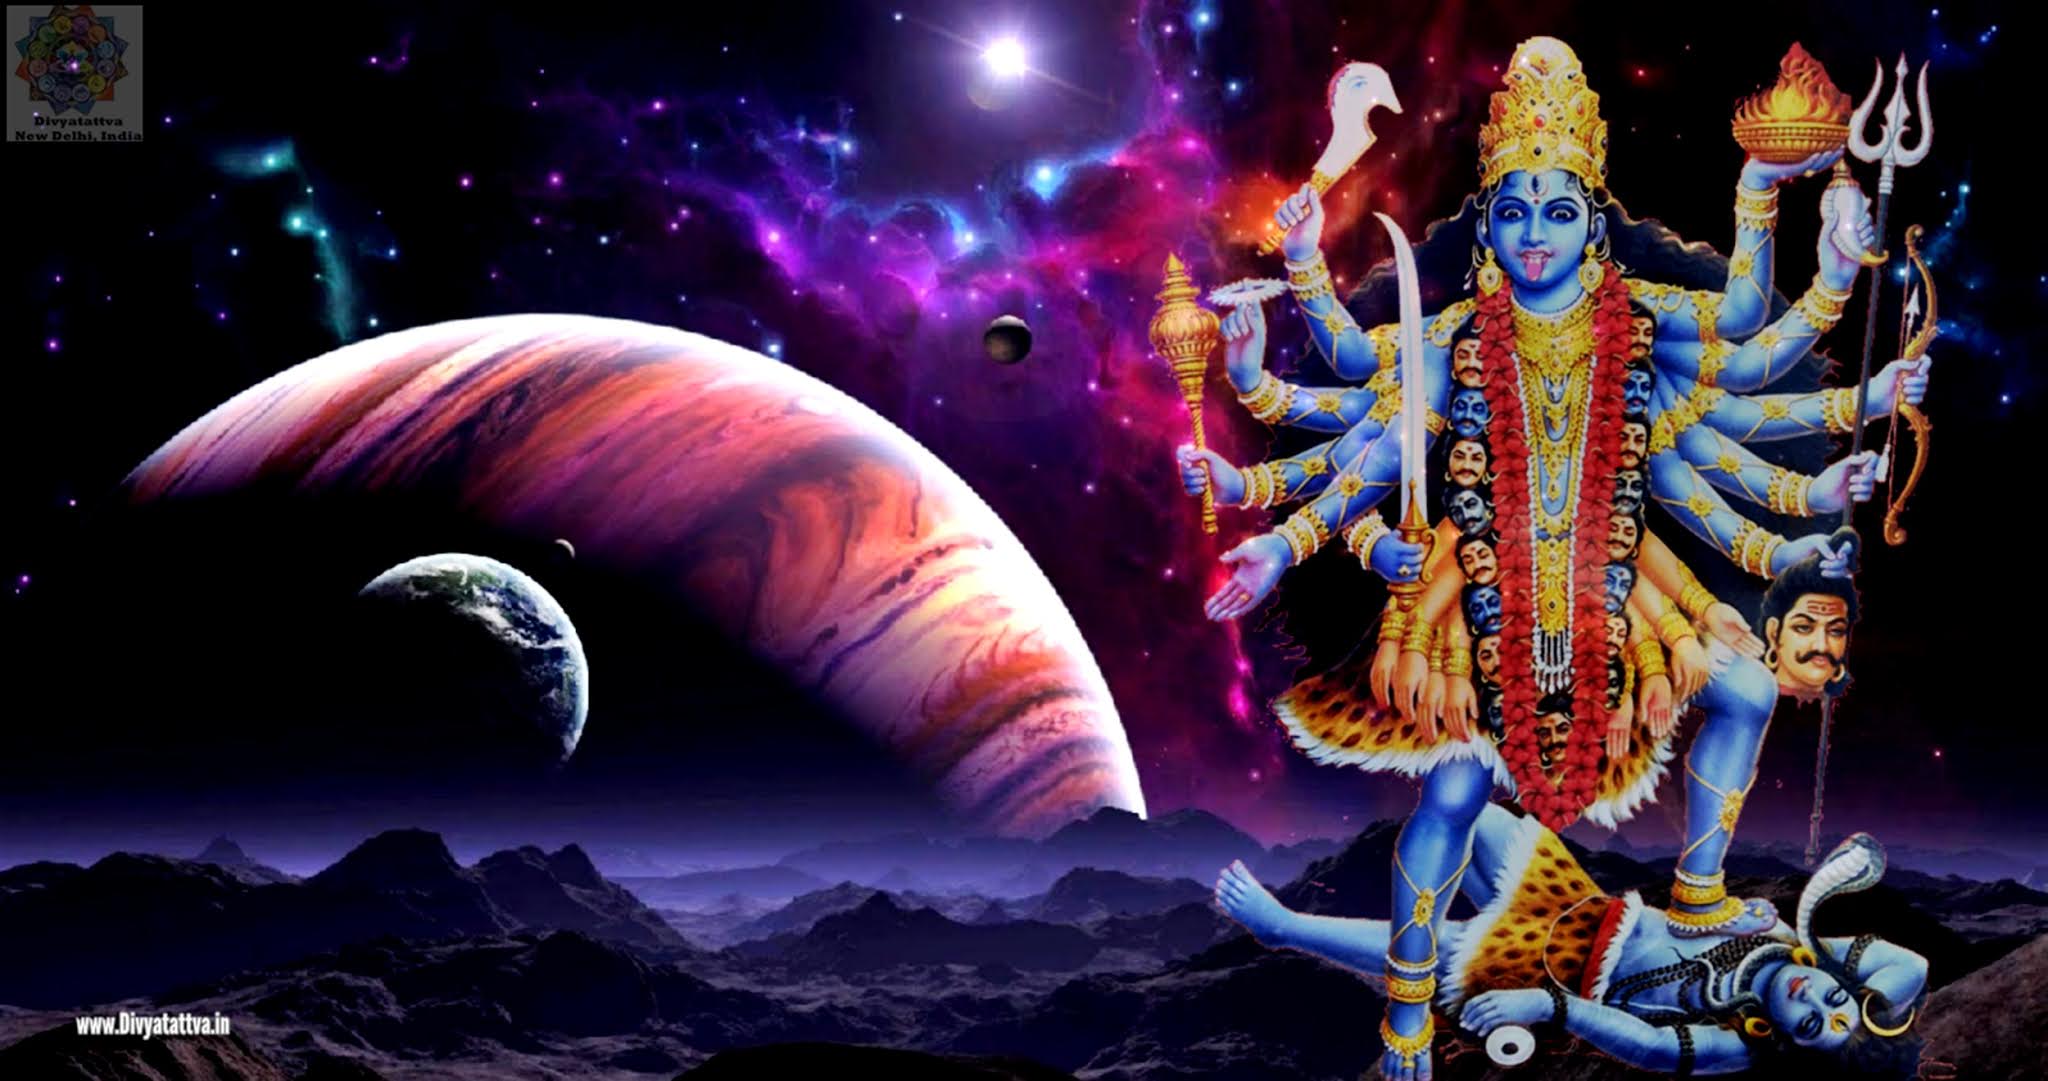 Kalika is a Hindu goddess wallpapers Kali is the chief of the Mahavidyas